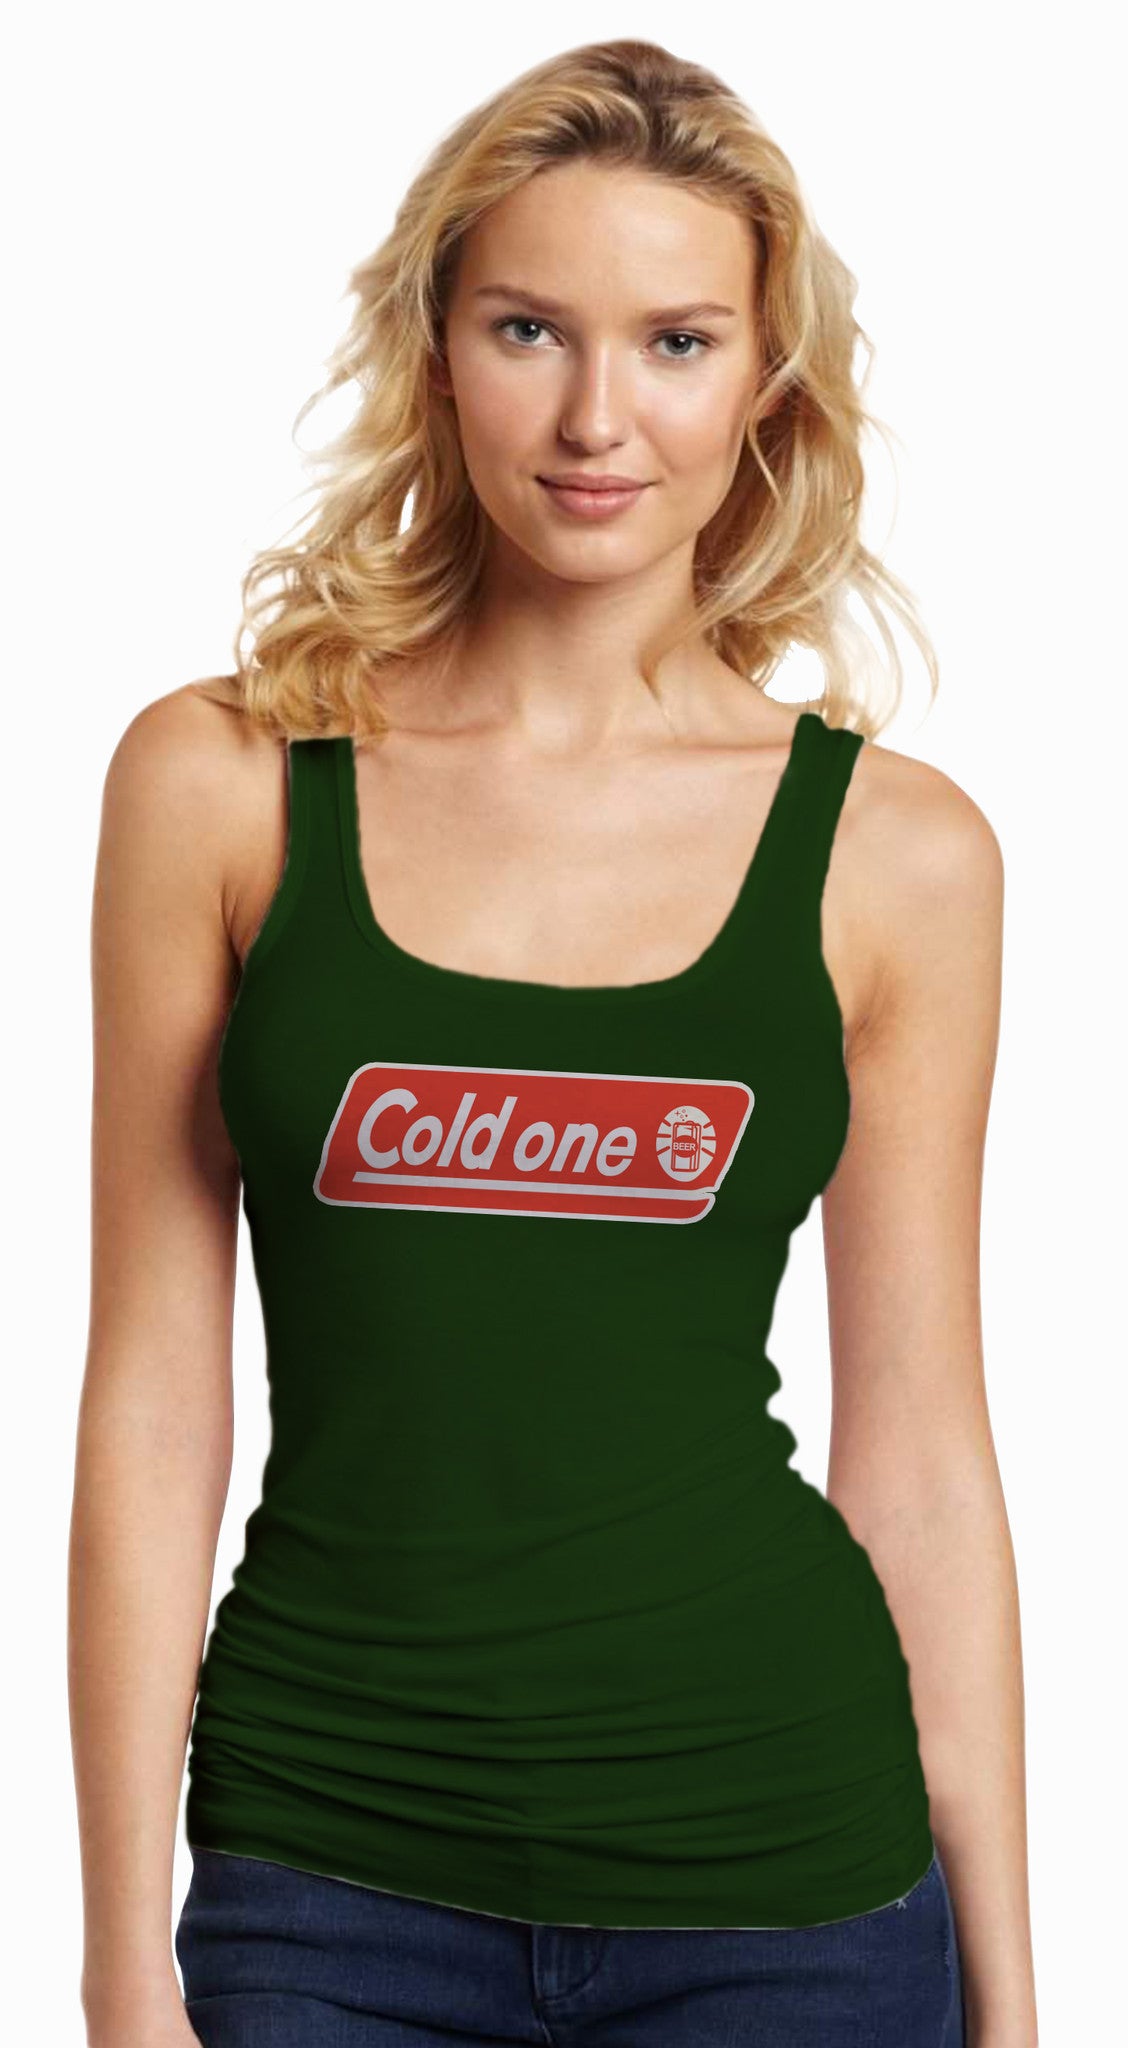 Cold One Dark green tanktop T-shirt for women - TshirtNow.net - 1